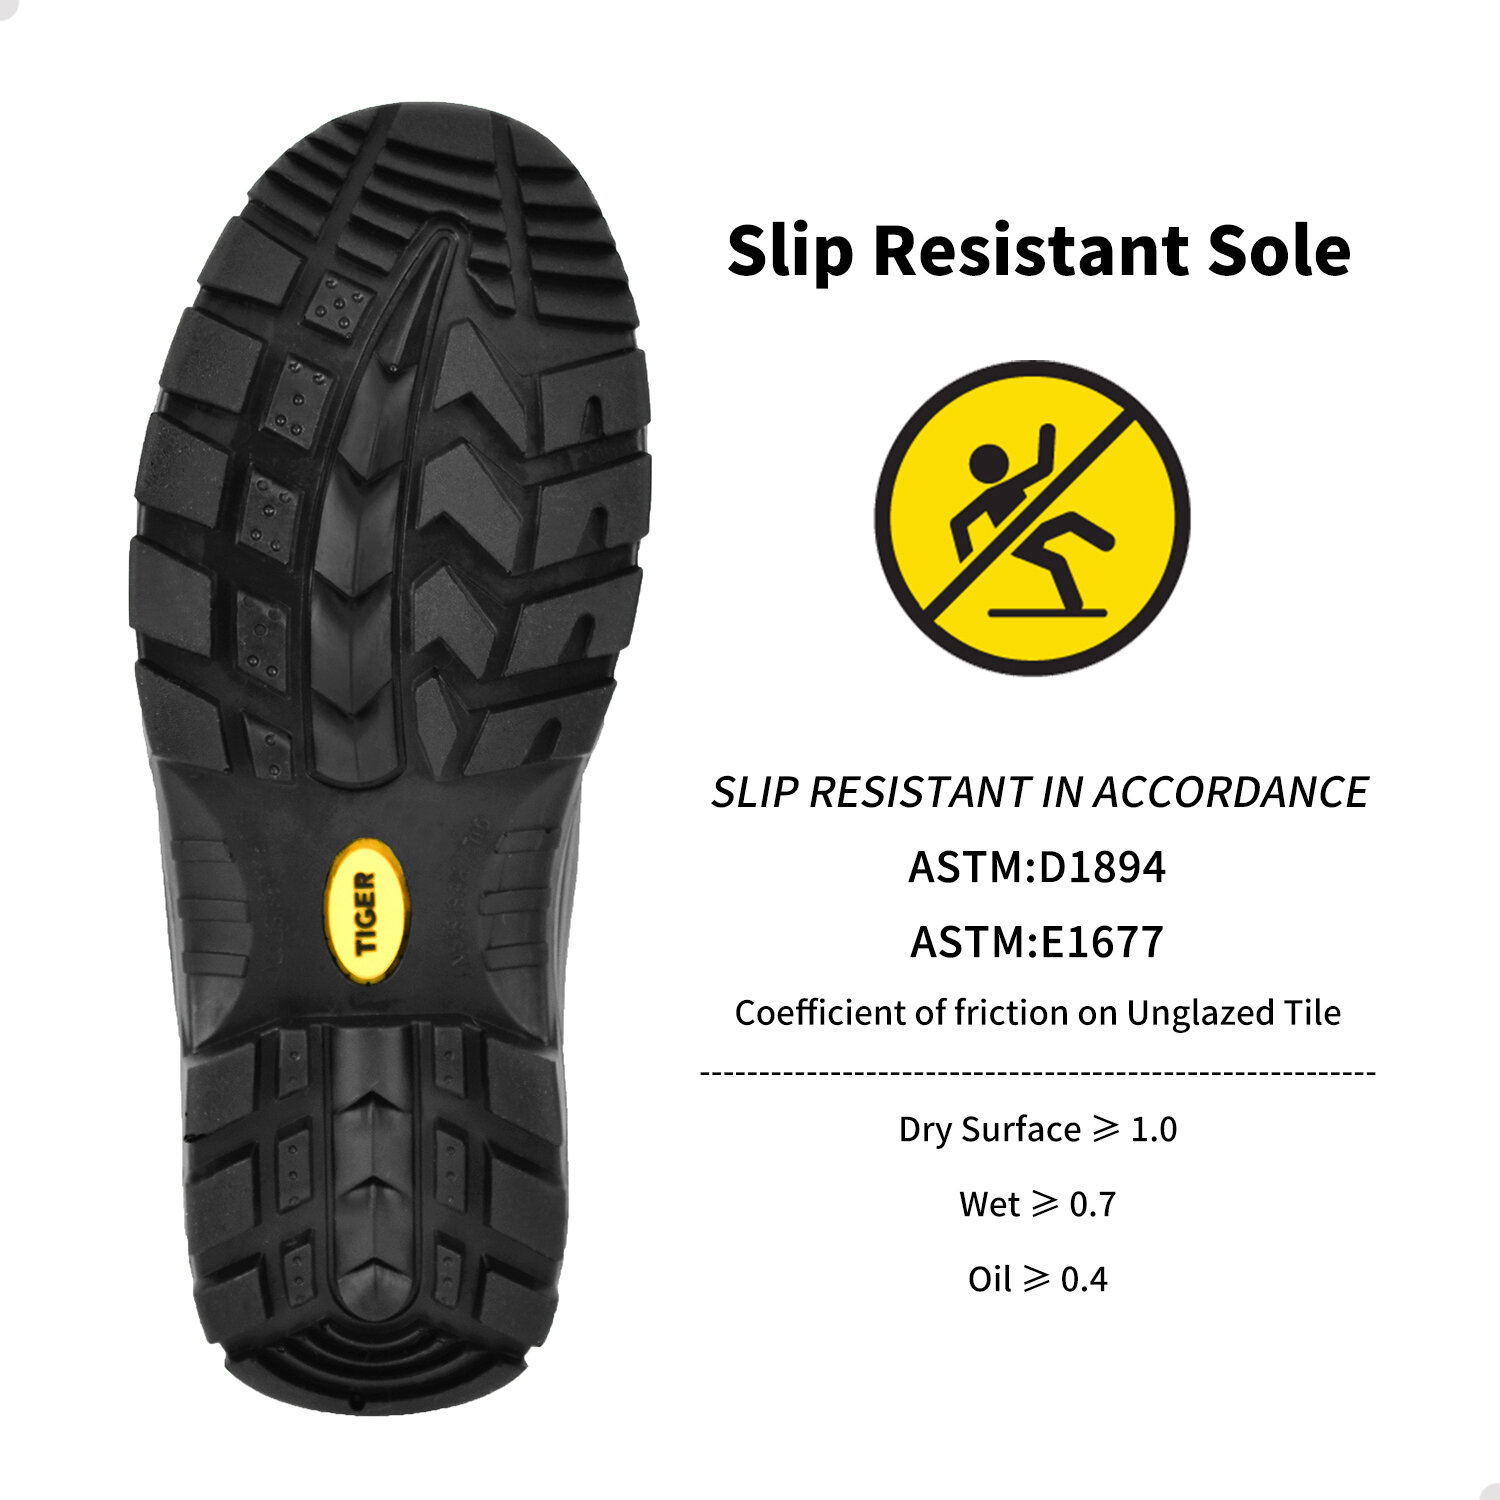 Tiger Men's Safety Boots Steel Toe Lightweight CSA Slip On Leather Work ...